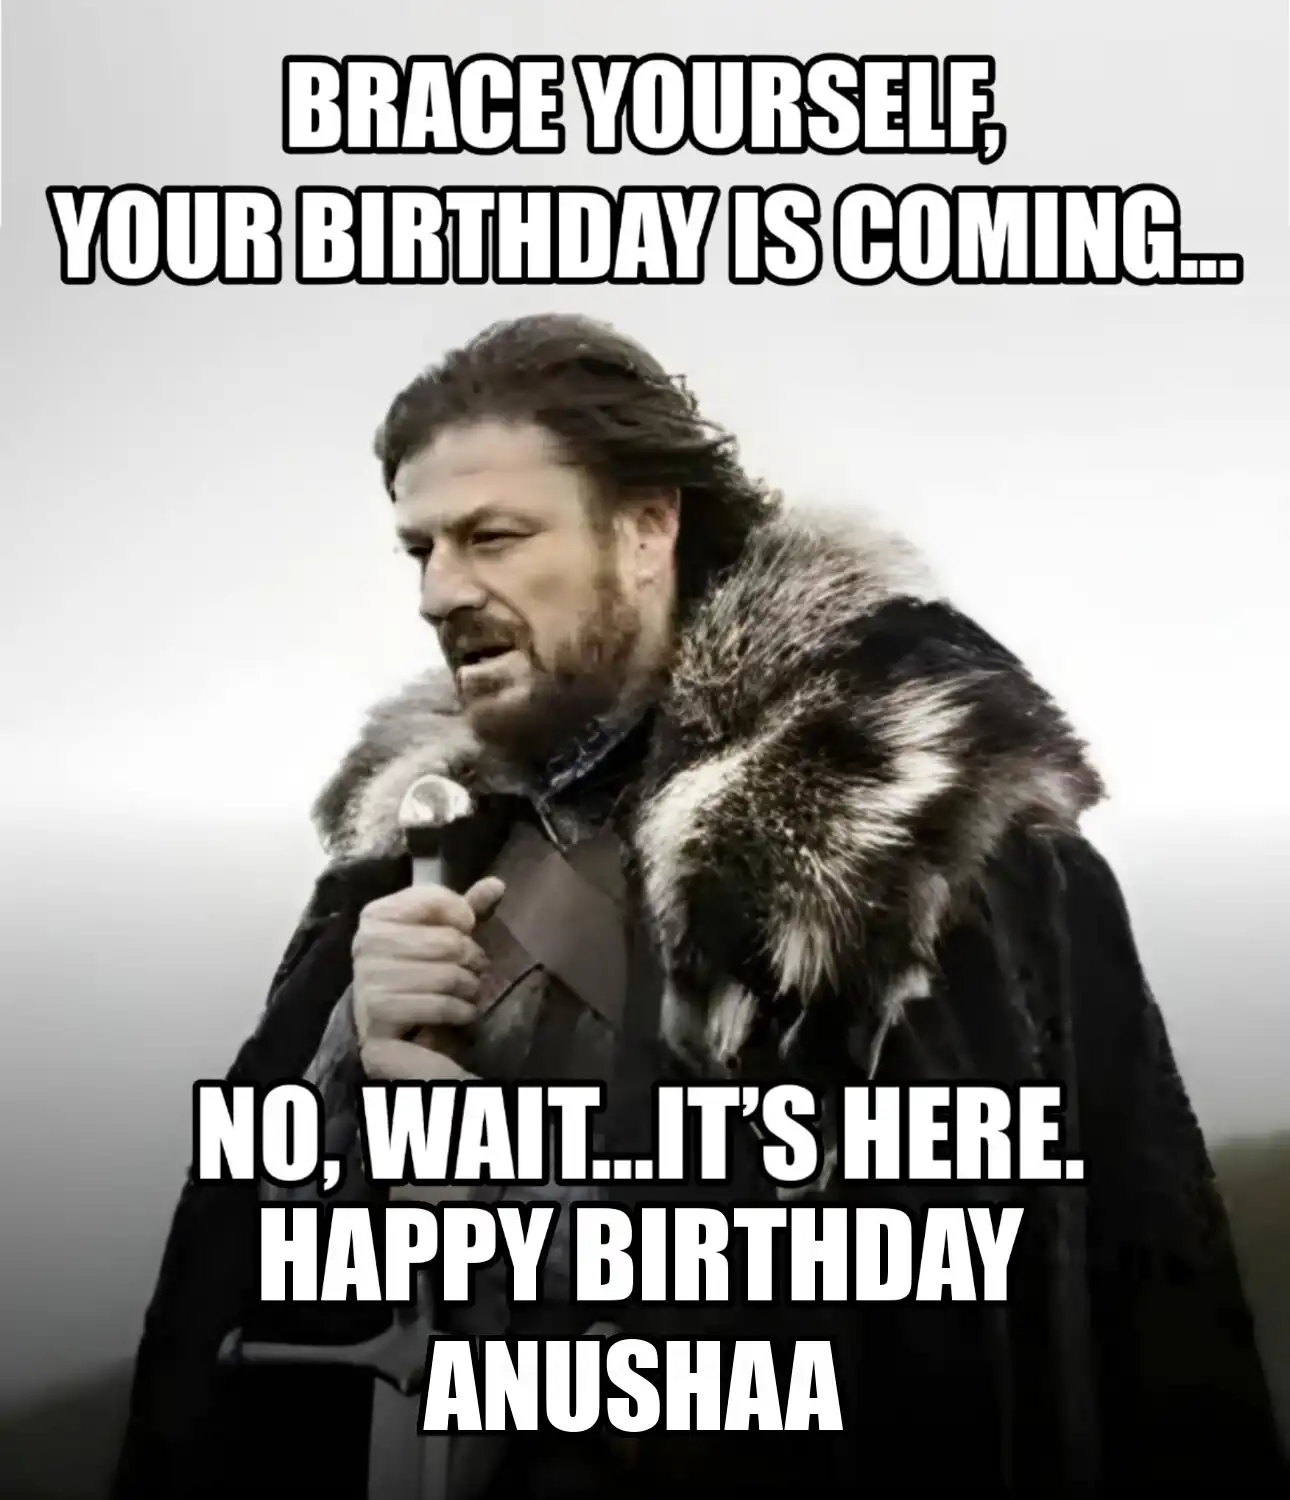 Happy Birthday Anushaa Brace Yourself Your Birthday Is Coming Meme